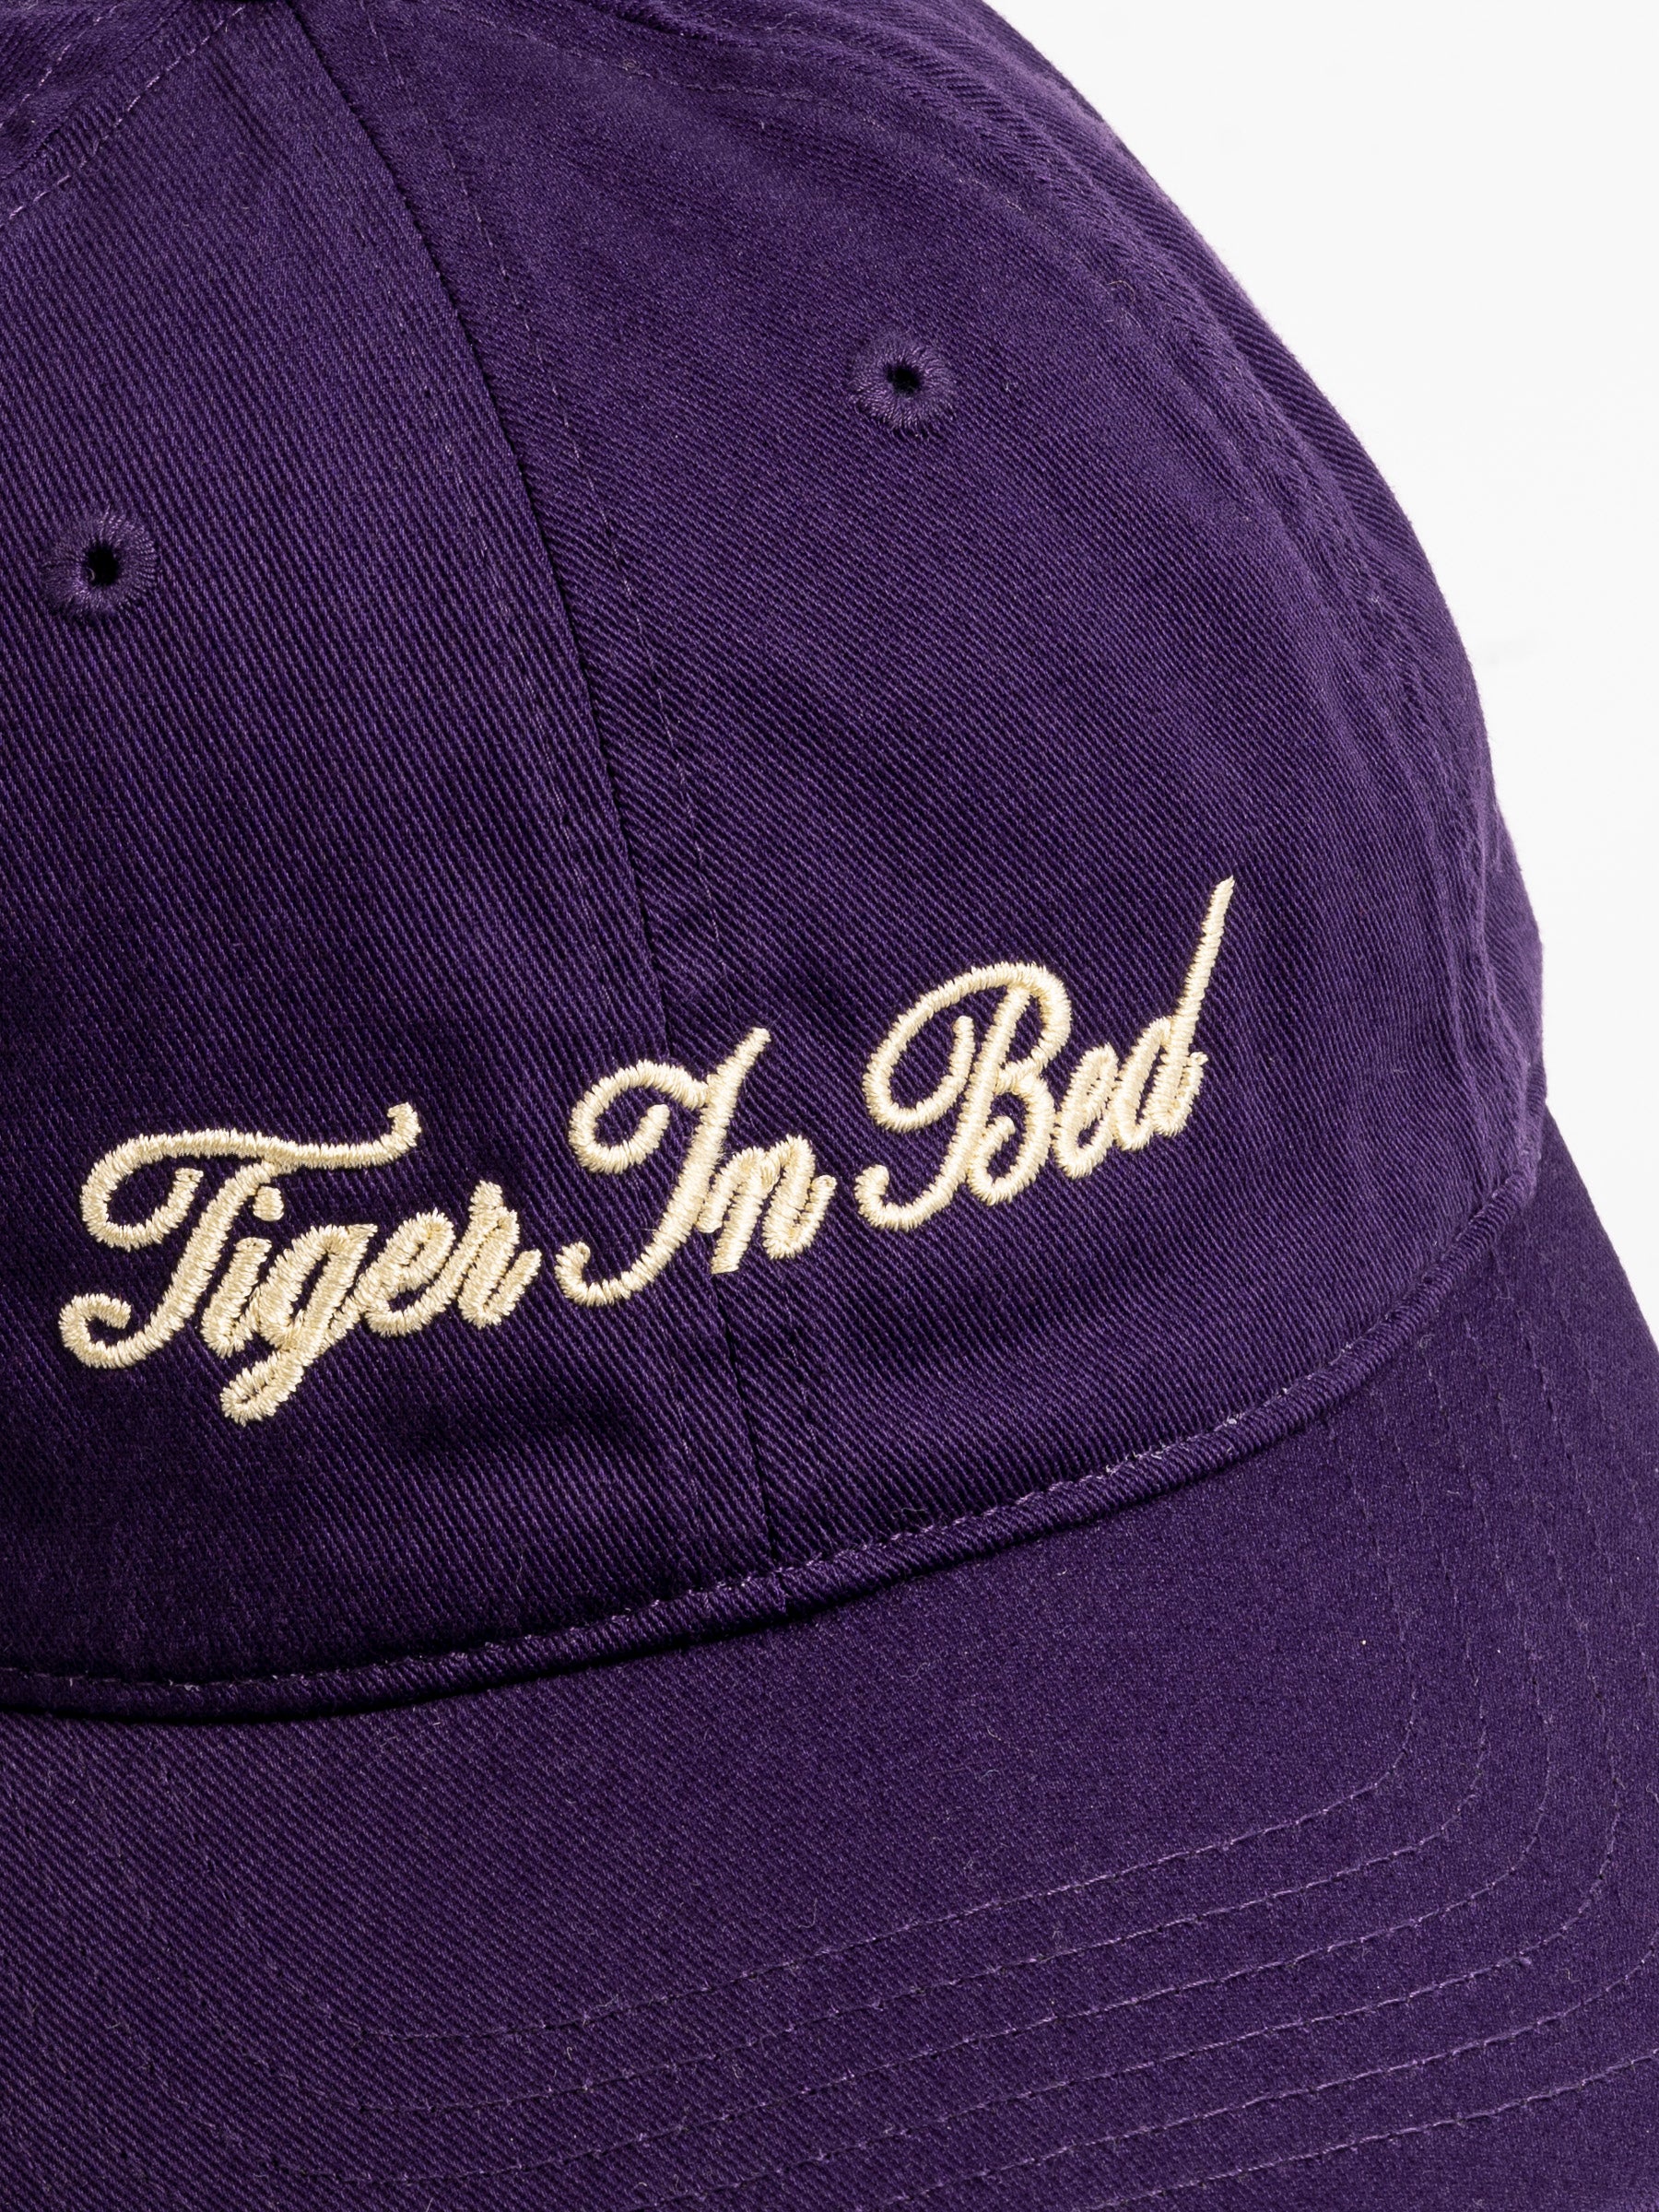 Tiger In Bed Cap Purple